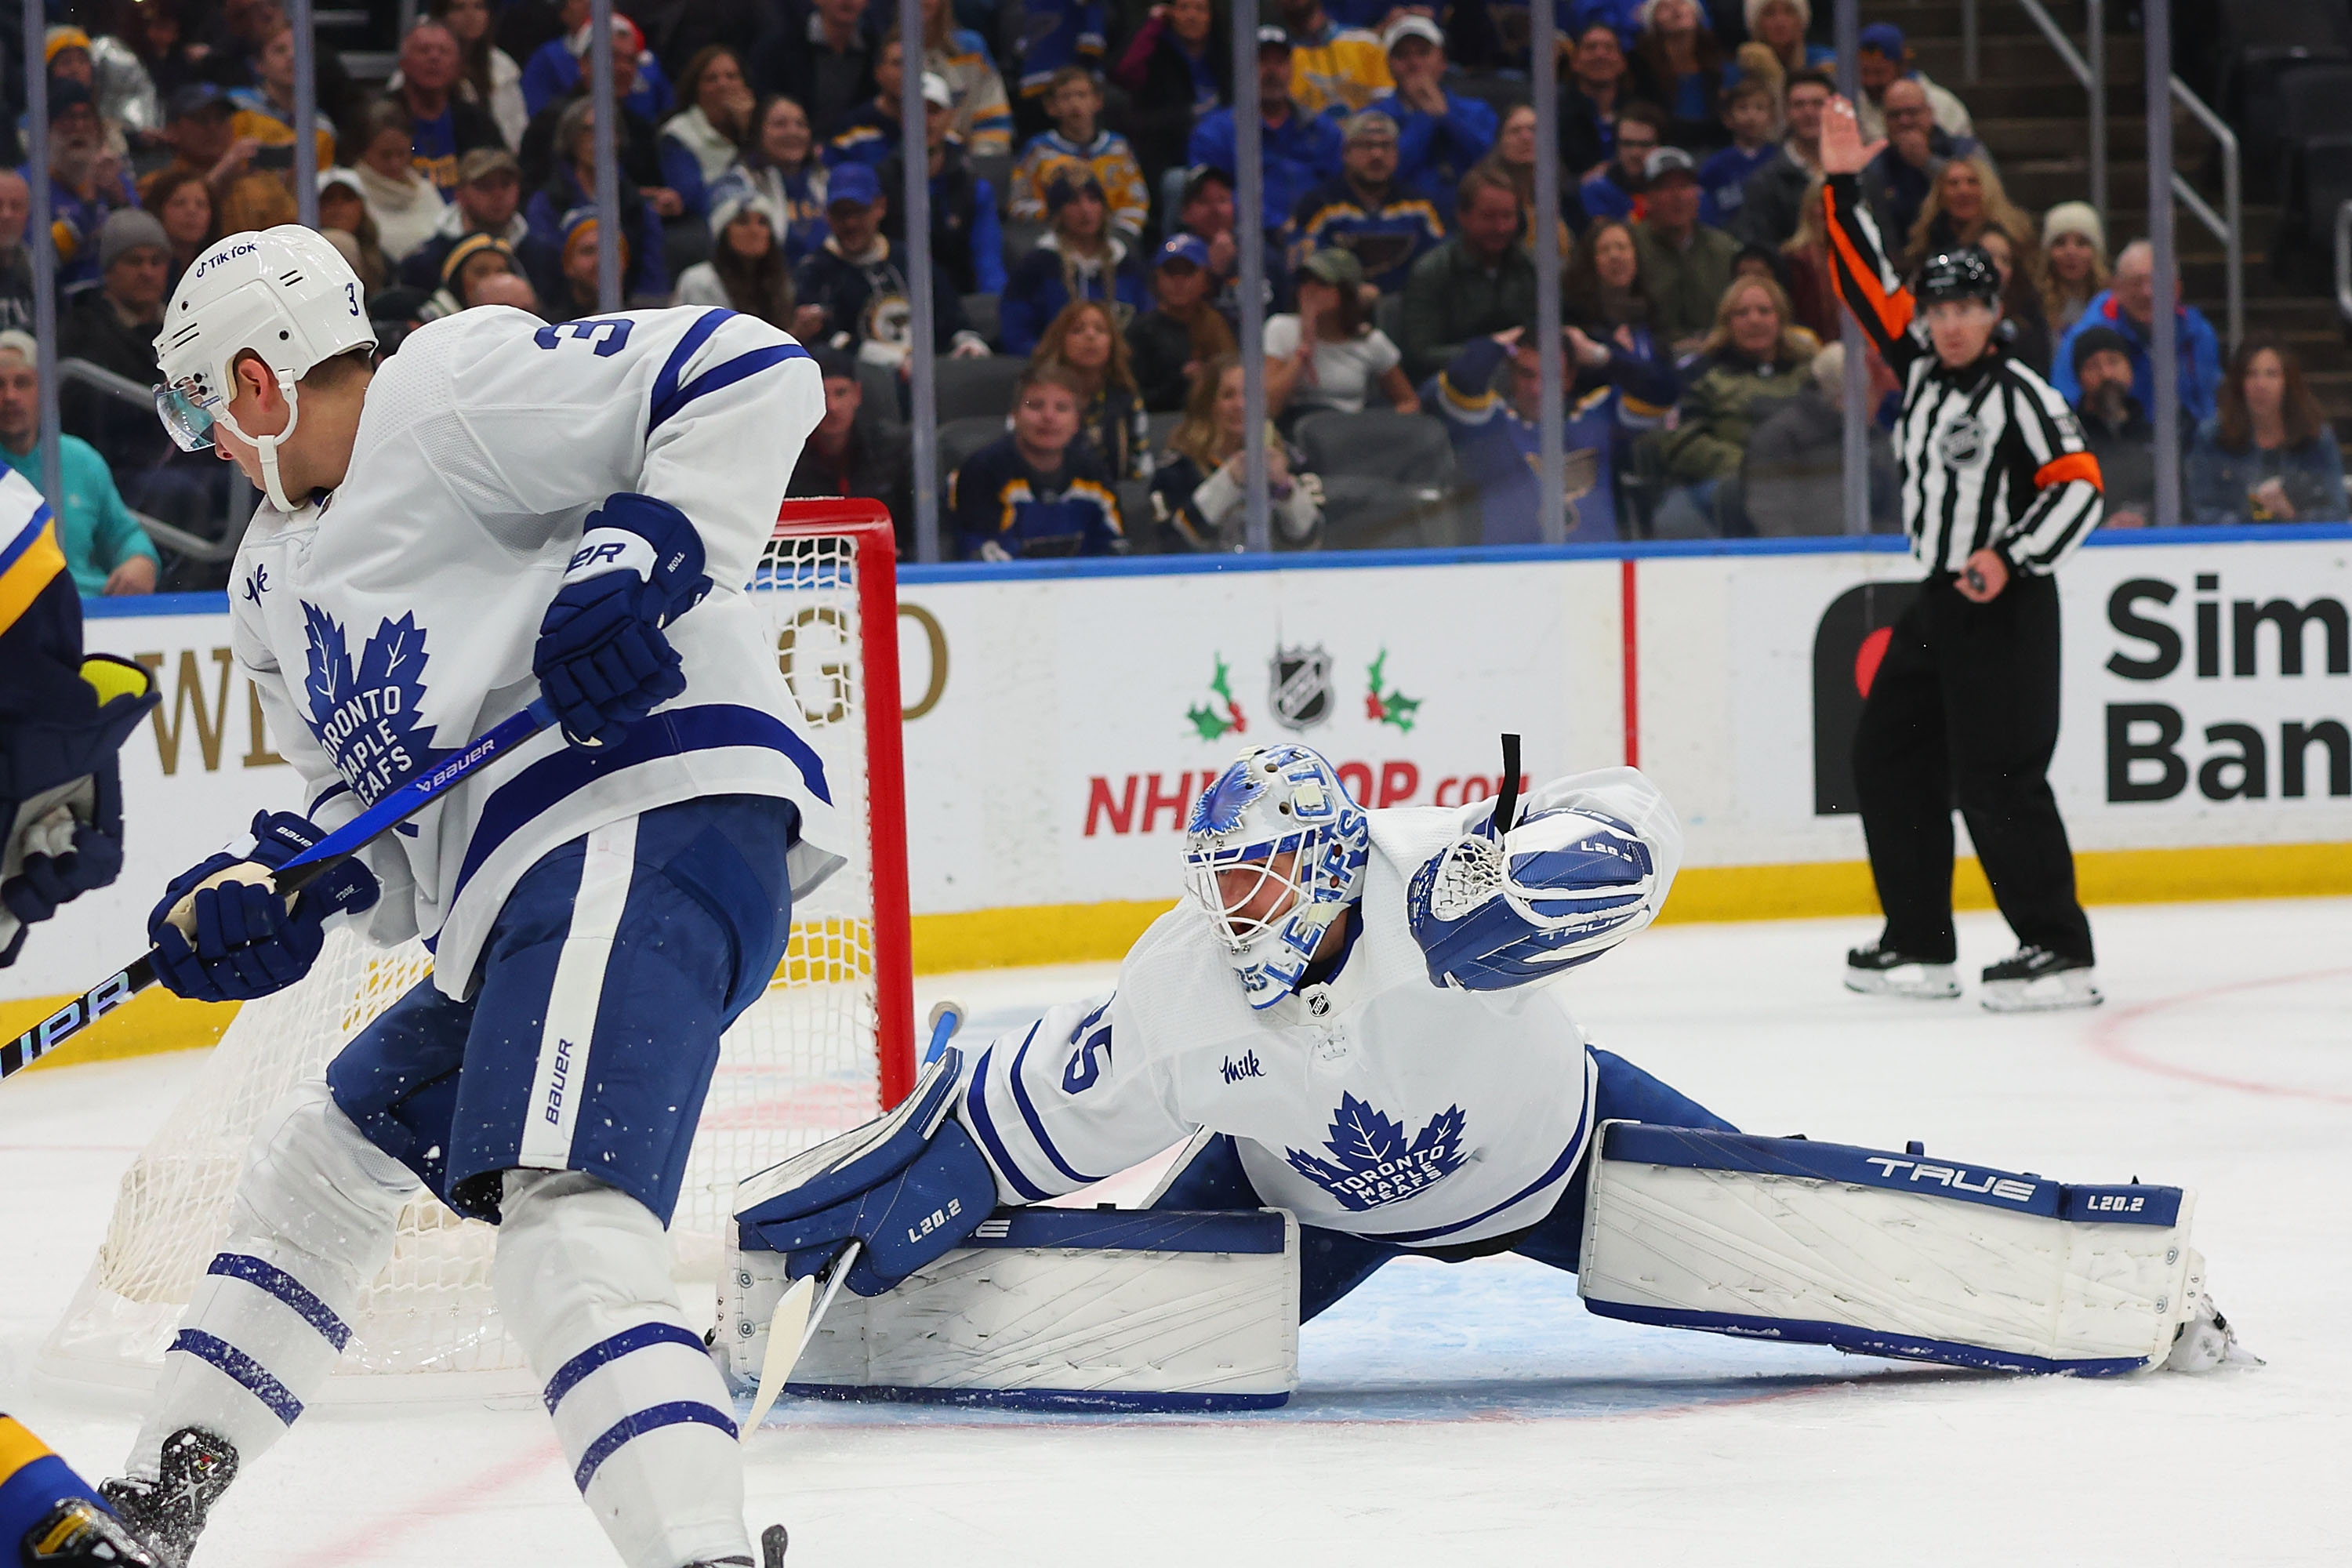 Nylander's winner helps Maple Leafs bounce Blues in overtime